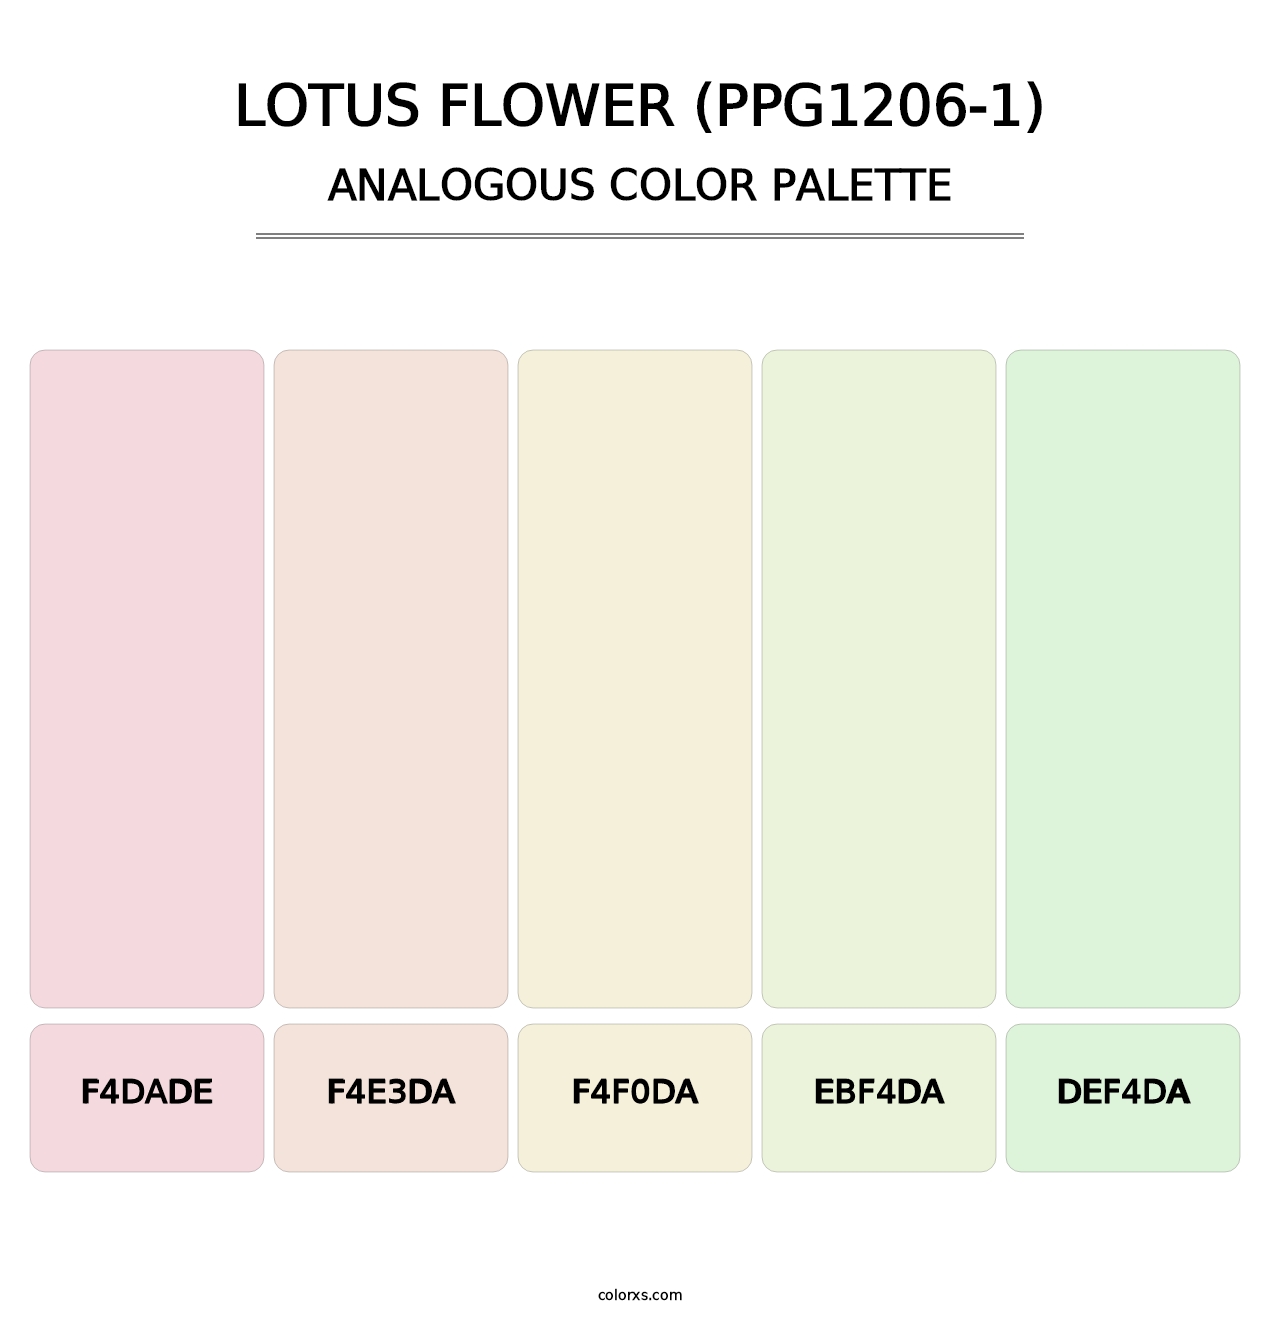 Lotus Flower (PPG1206-1) - Analogous Color Palette